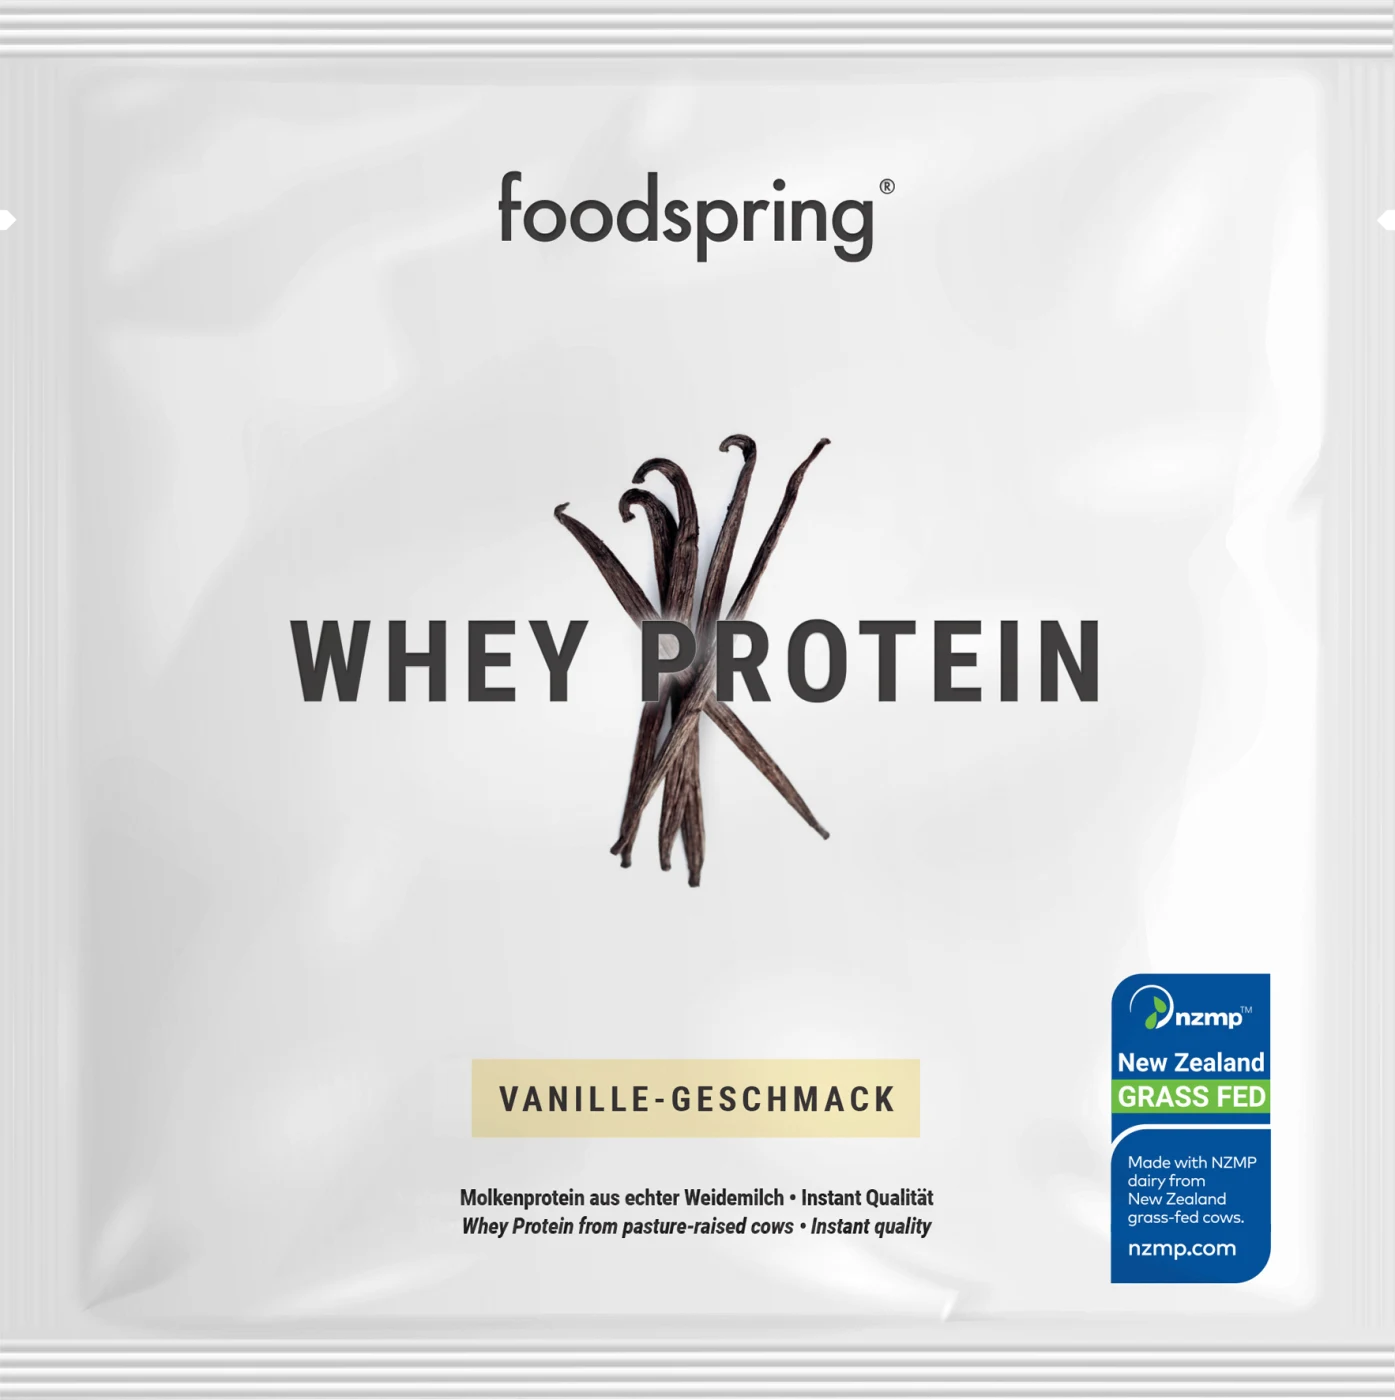 Foodspring Maroc - Protéine Whey Vanille - GermanBeautyShop